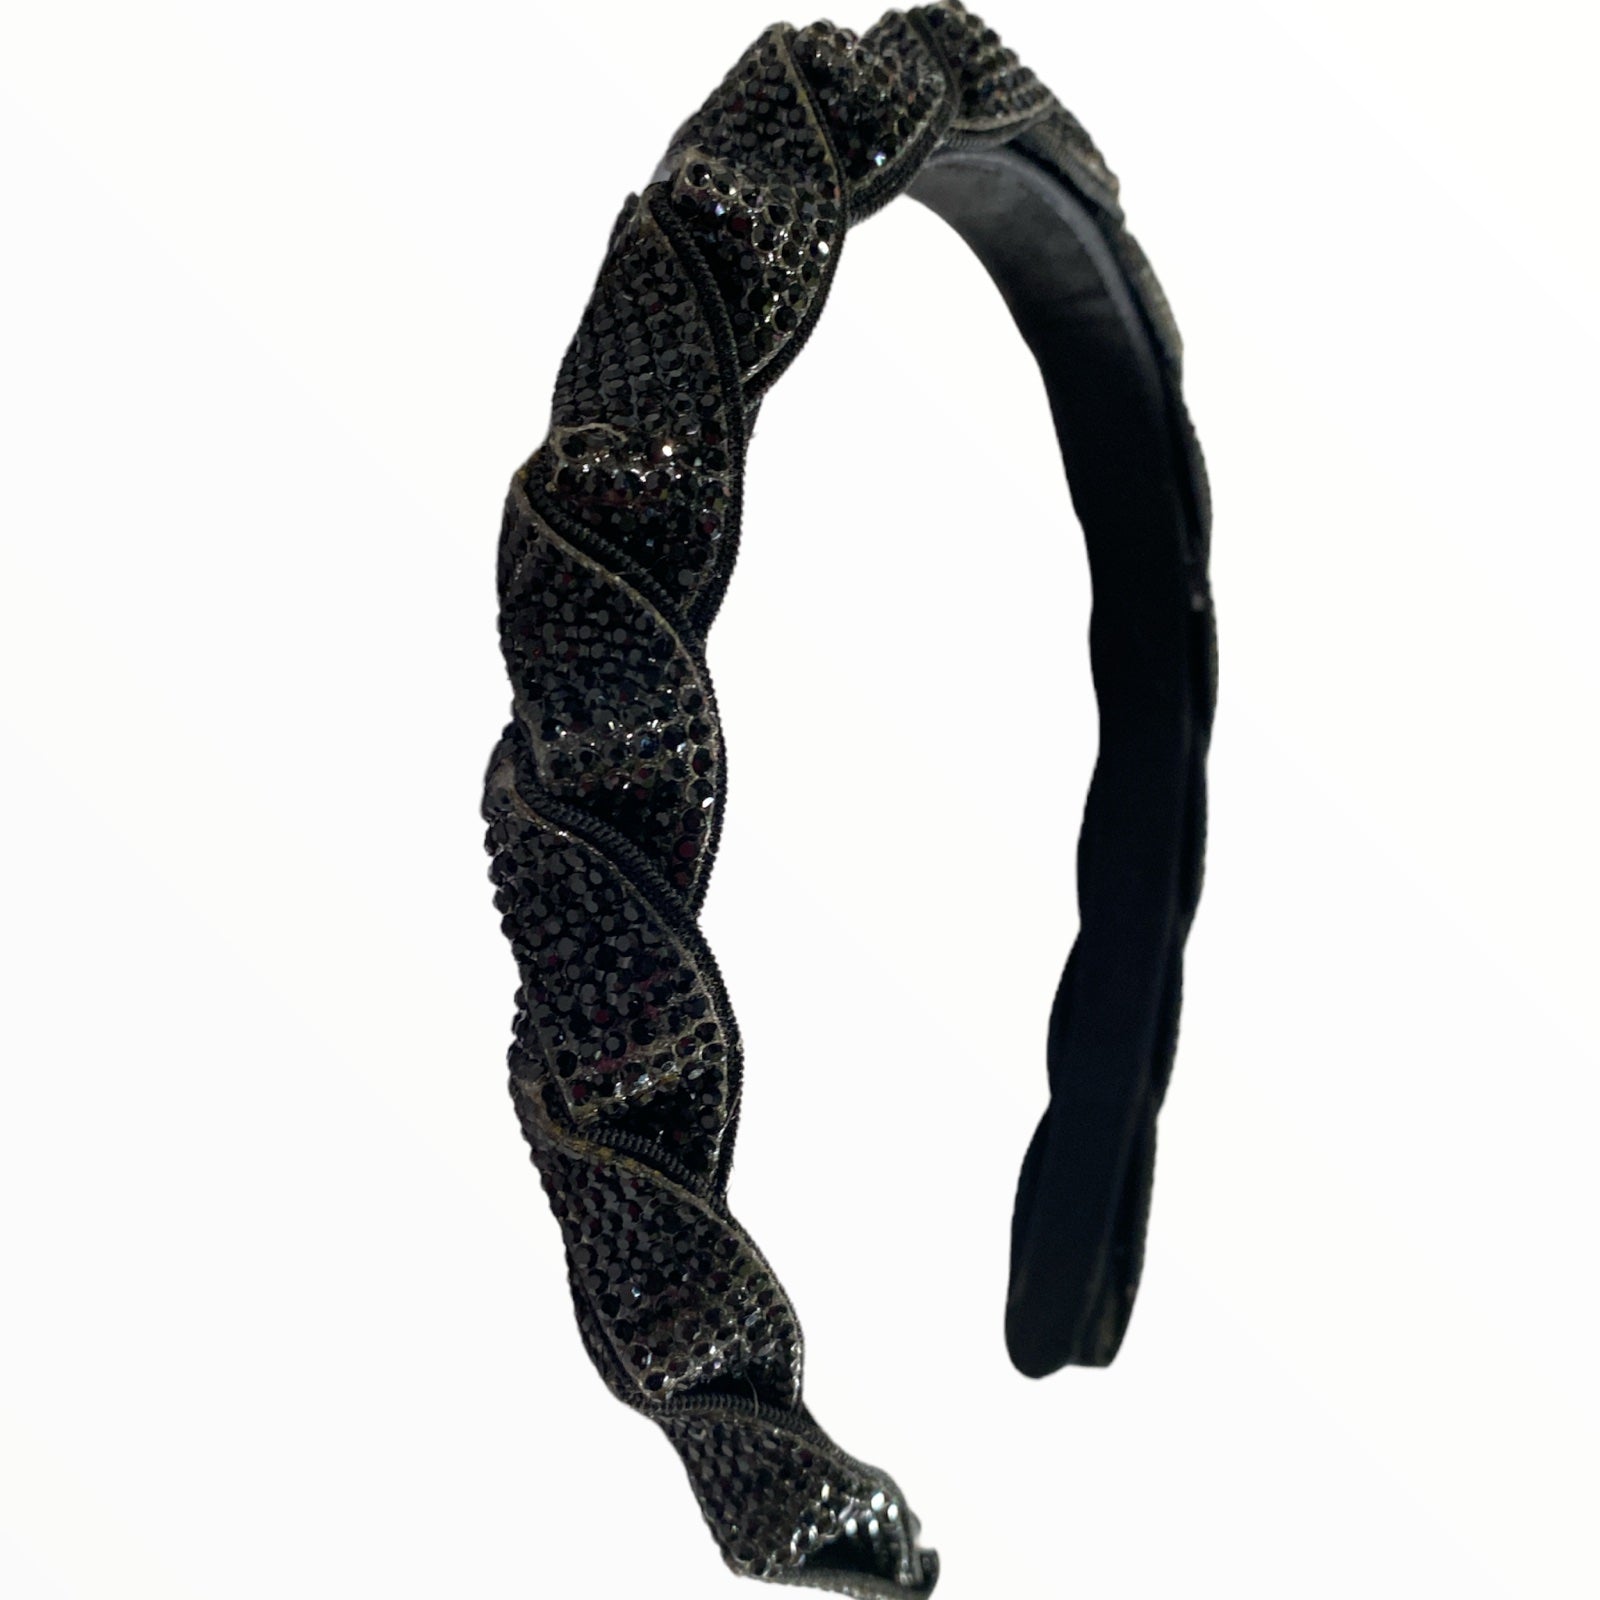 Black luxury braided hairband